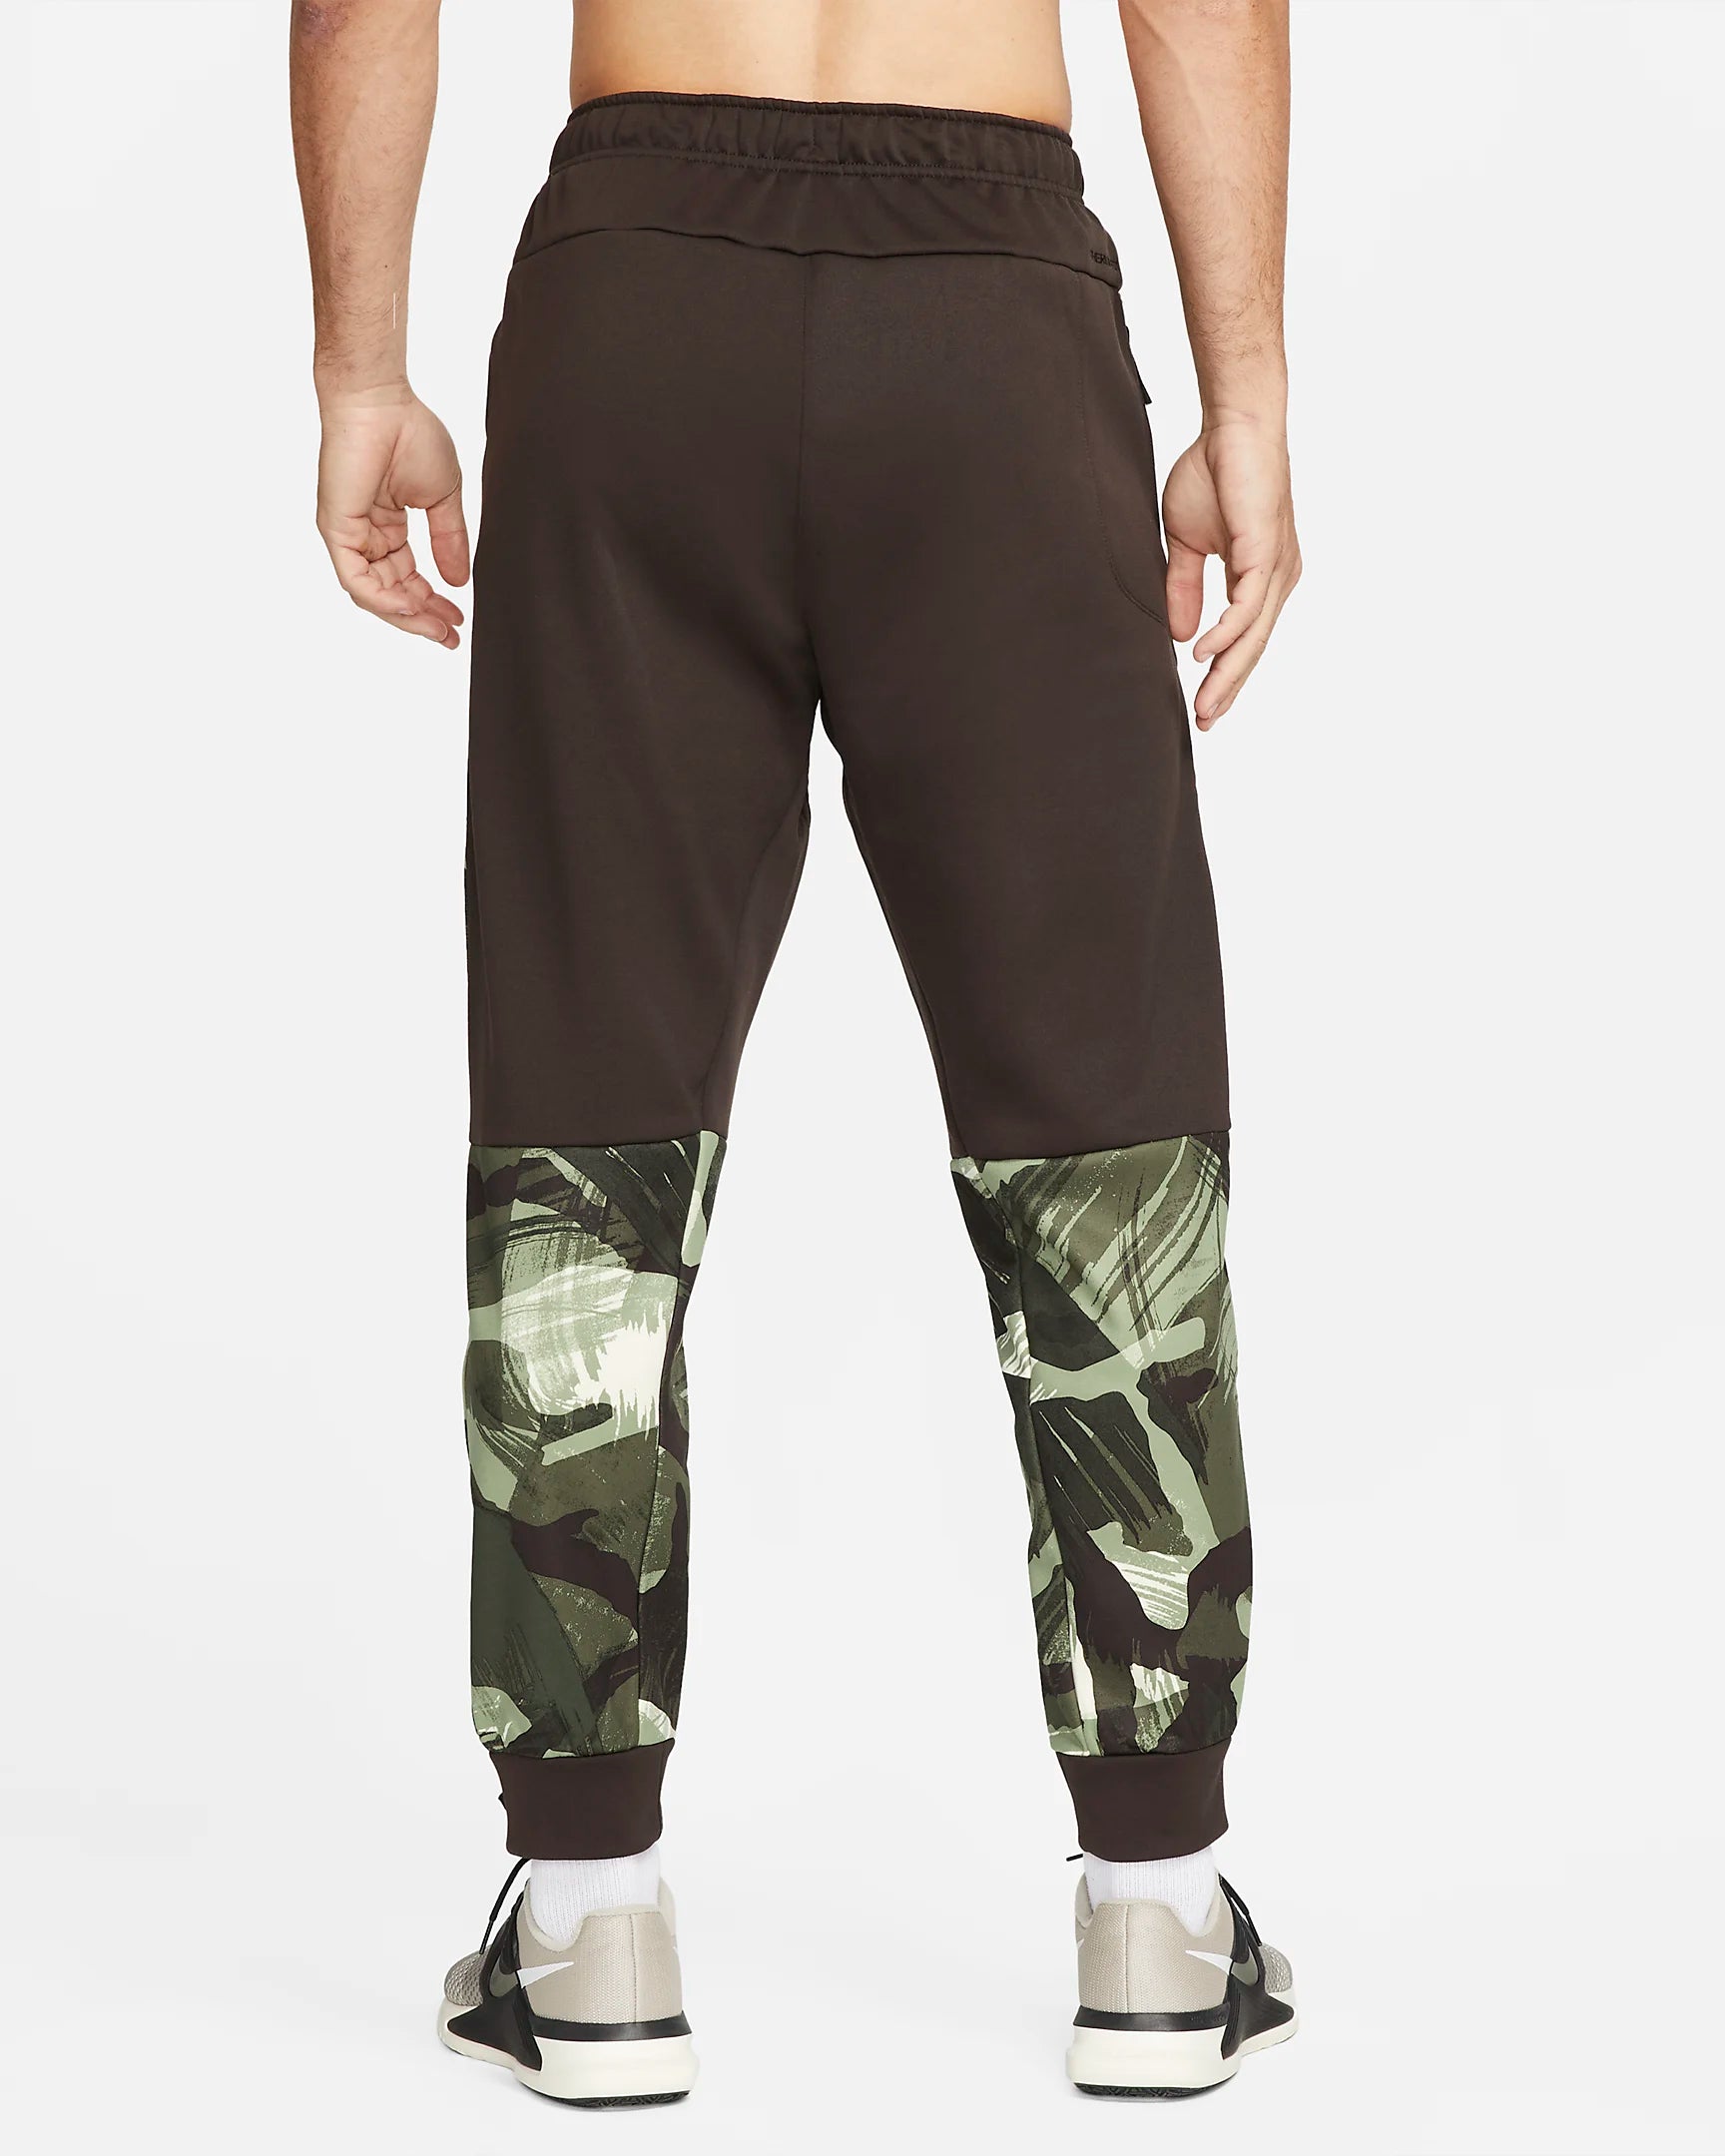 Pantaloni Nike Therma Fit - Marrone/Cachi